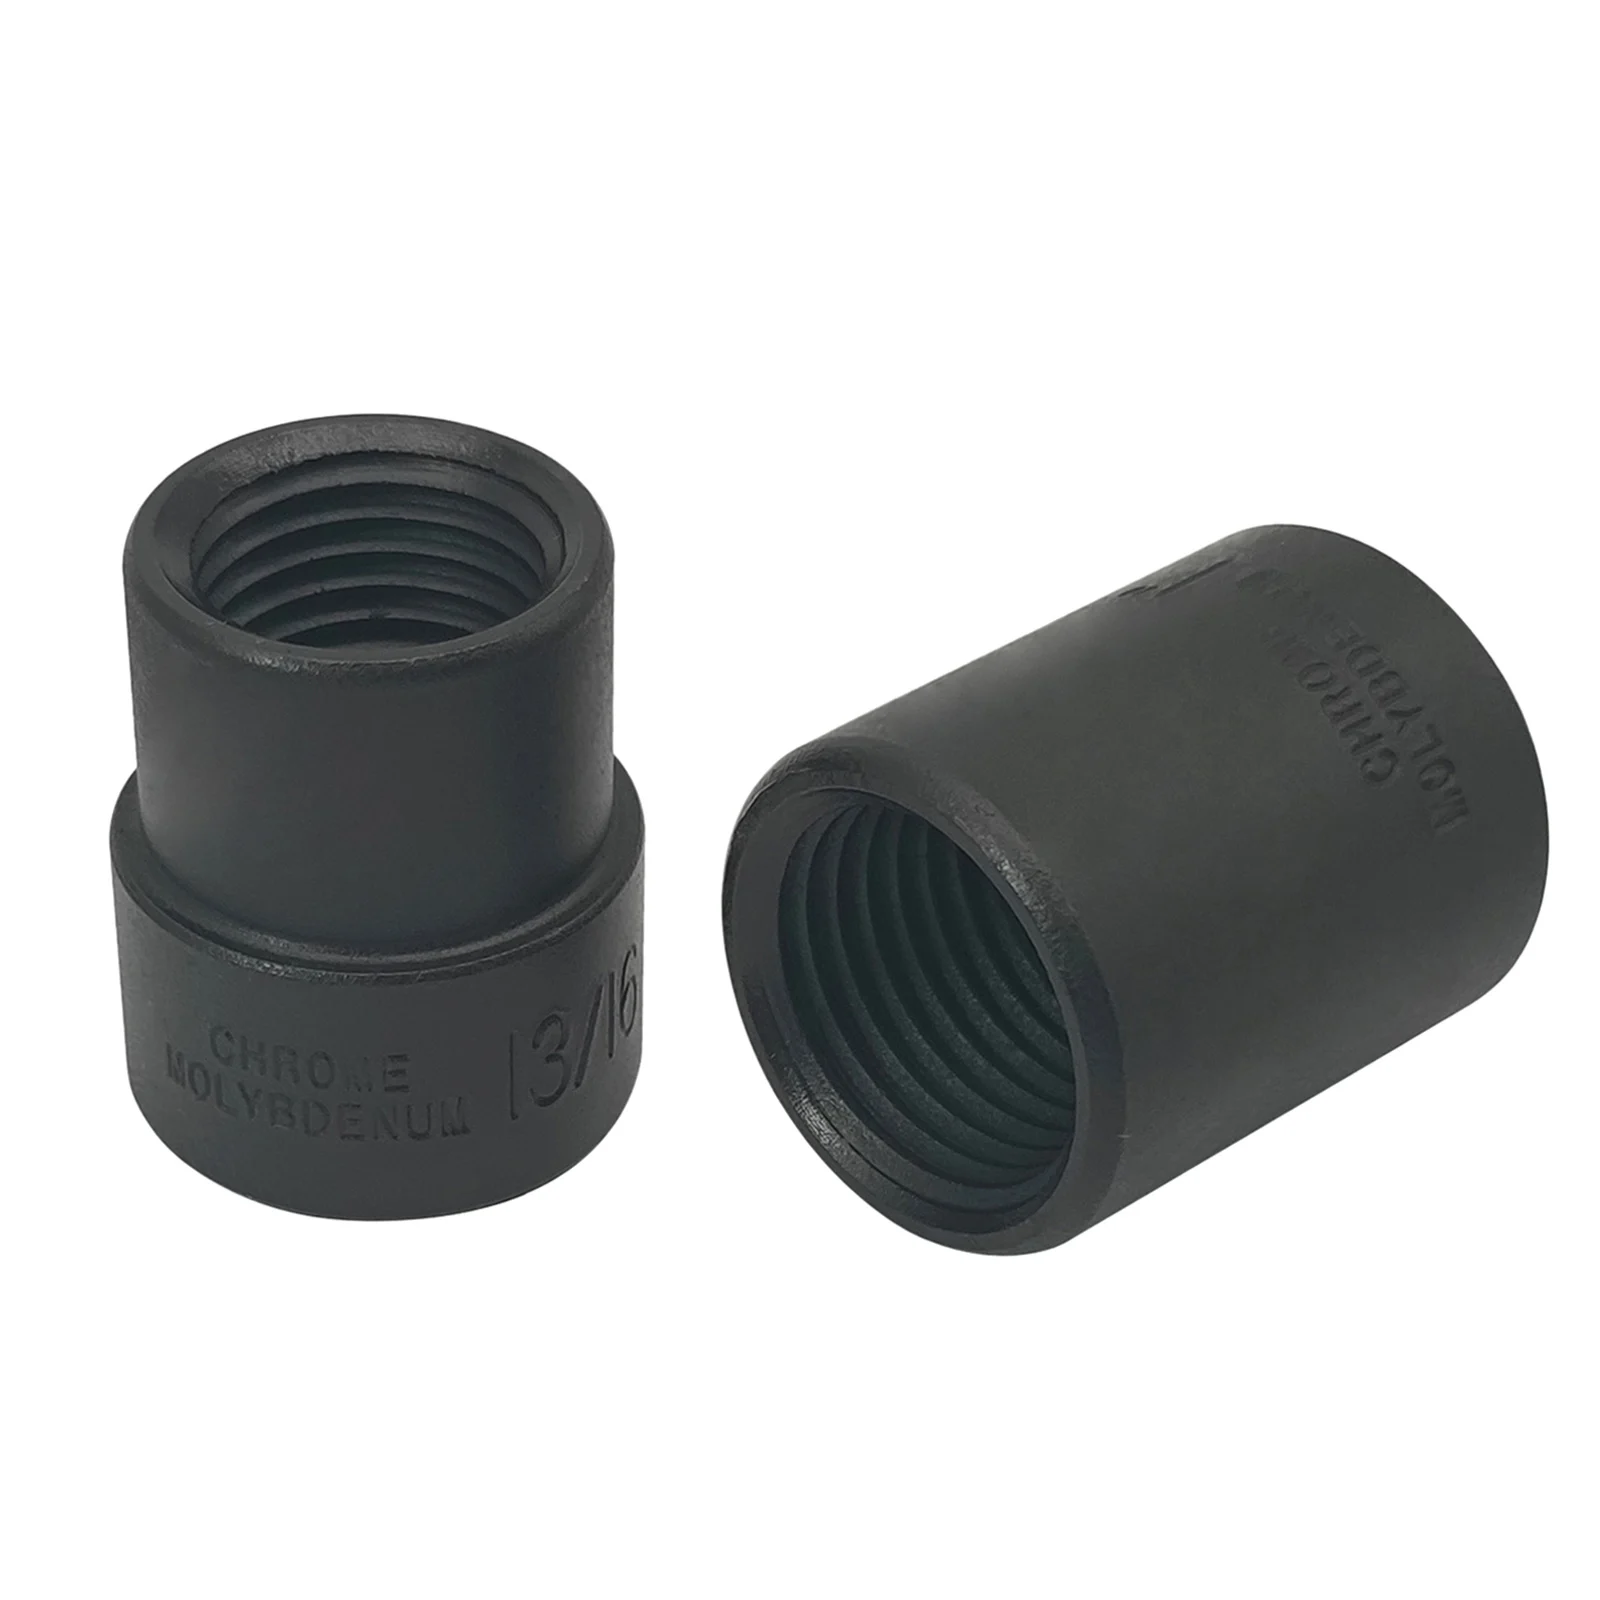 Steel Emergency Lug Nut Removal Socket Kit Tool 19-26mm, High Performance